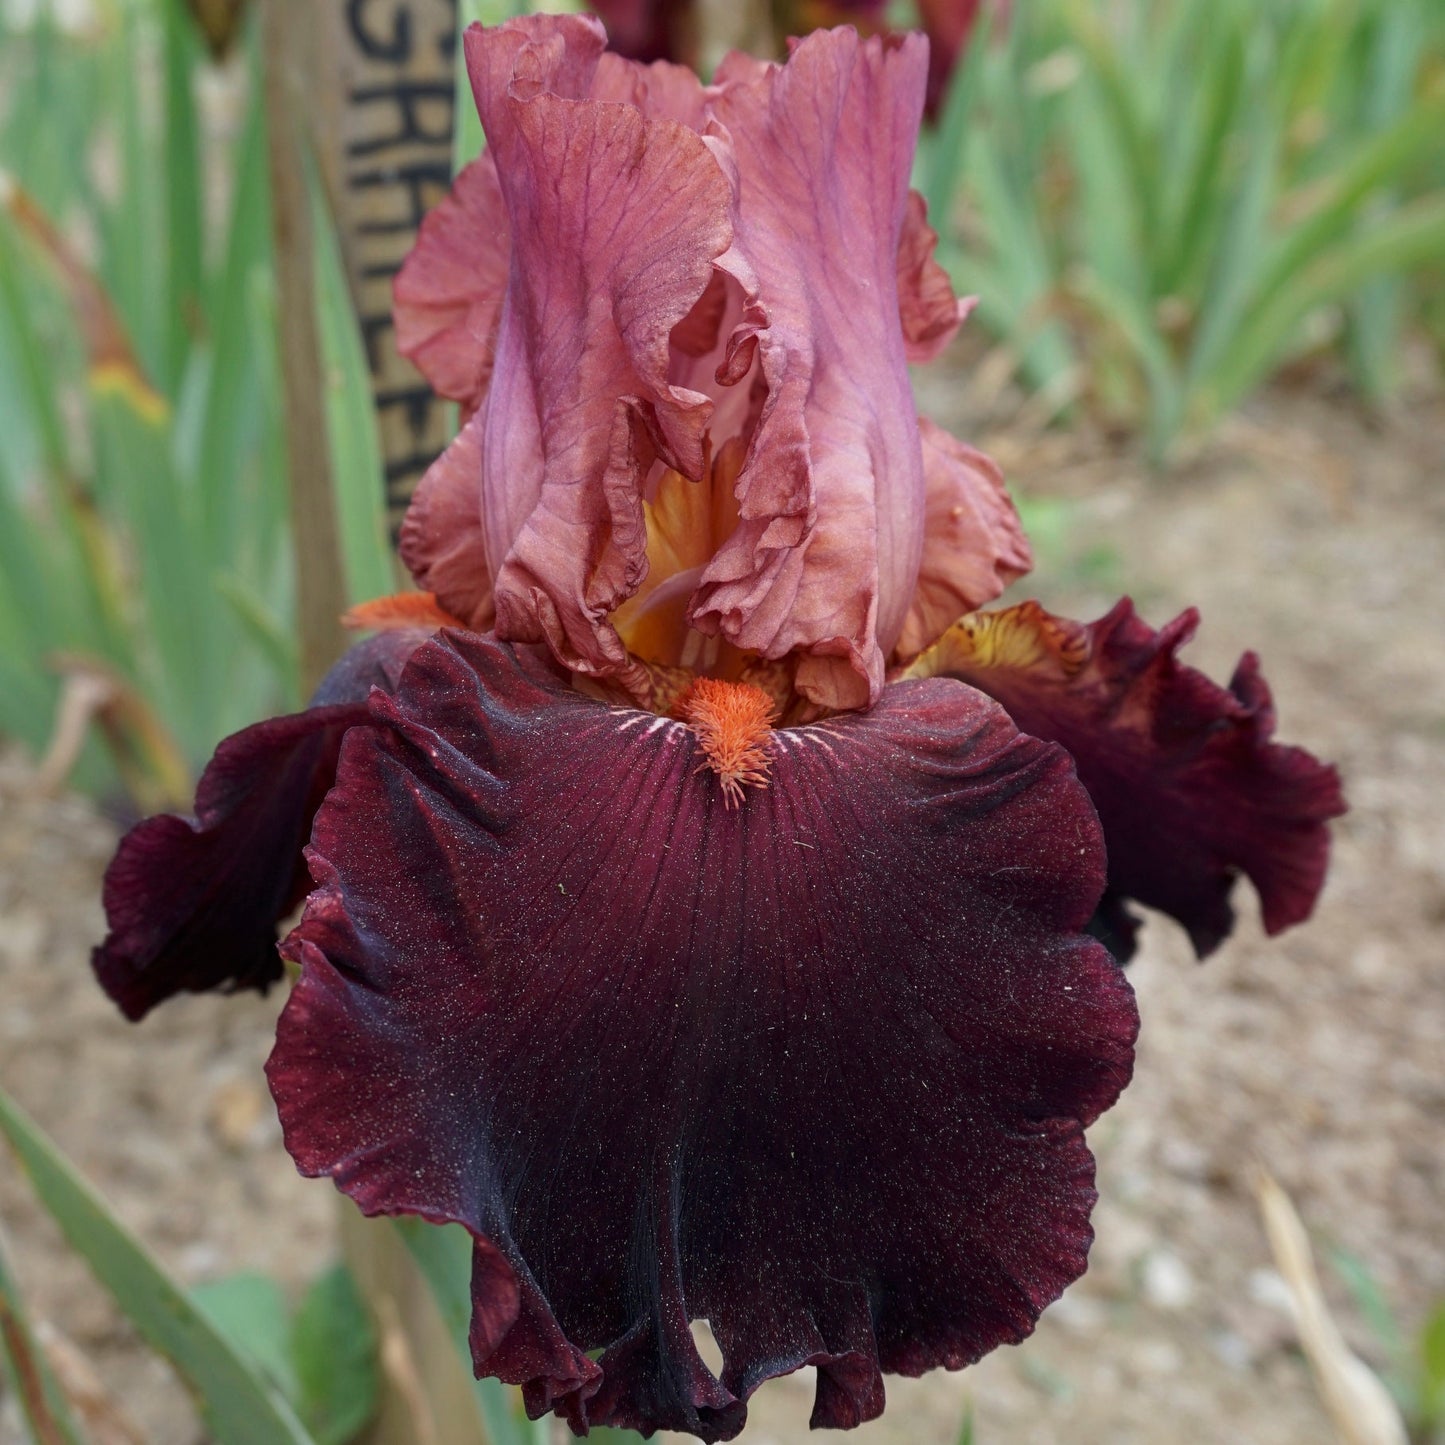 WEARING RUBIES - Blyth 2002 - Tall Bearded Iris - Long bloom - Fragrant